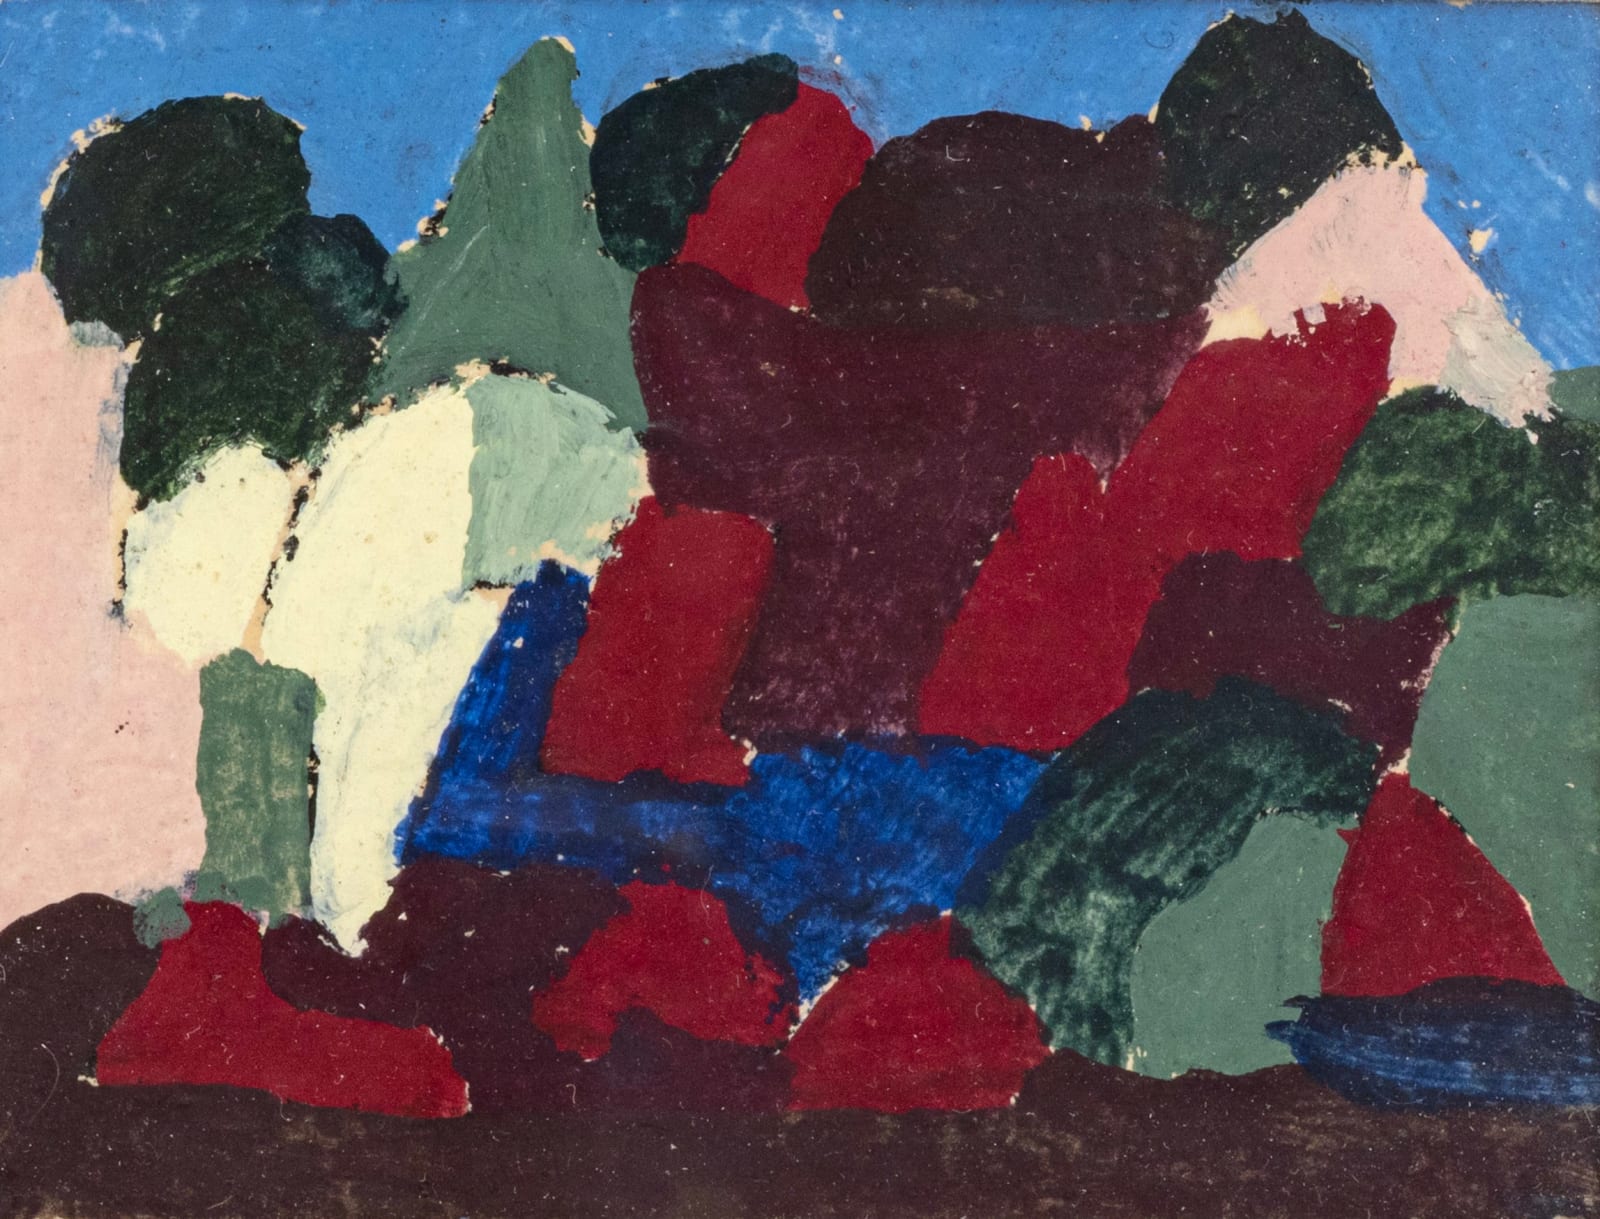 Arthur Dove, Abstract, c. 1942